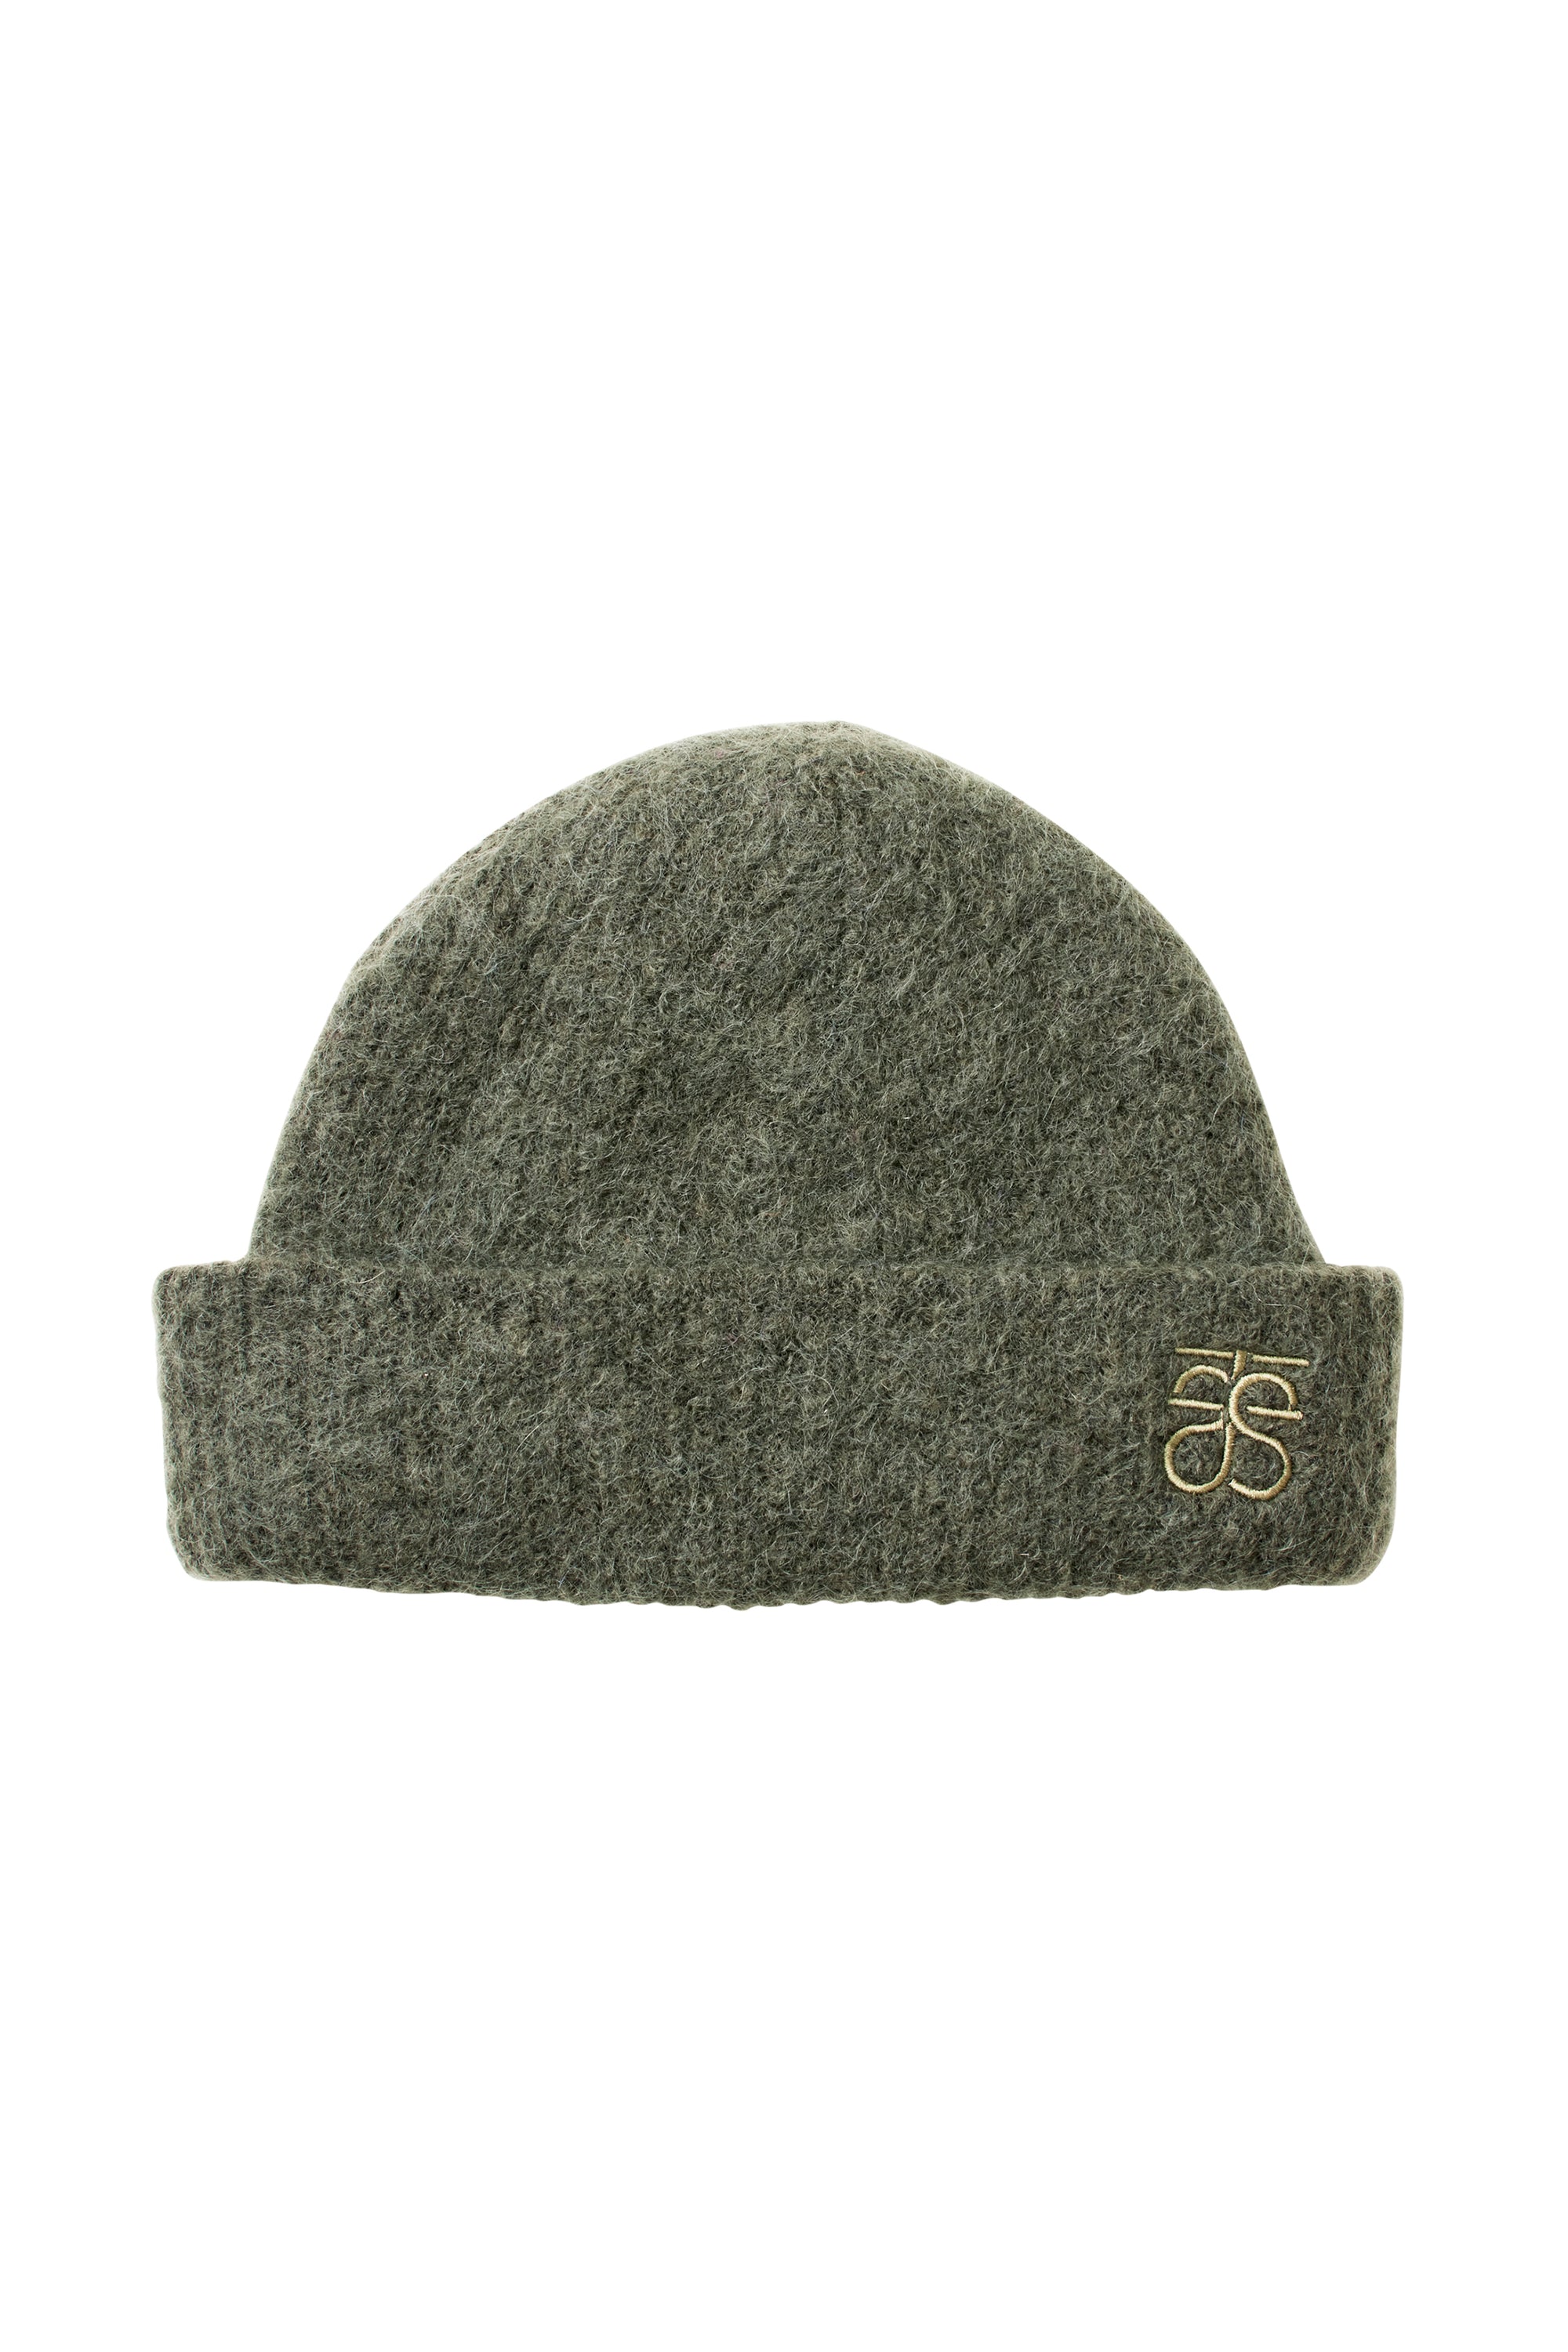 Brookline Knit Hat, Forest